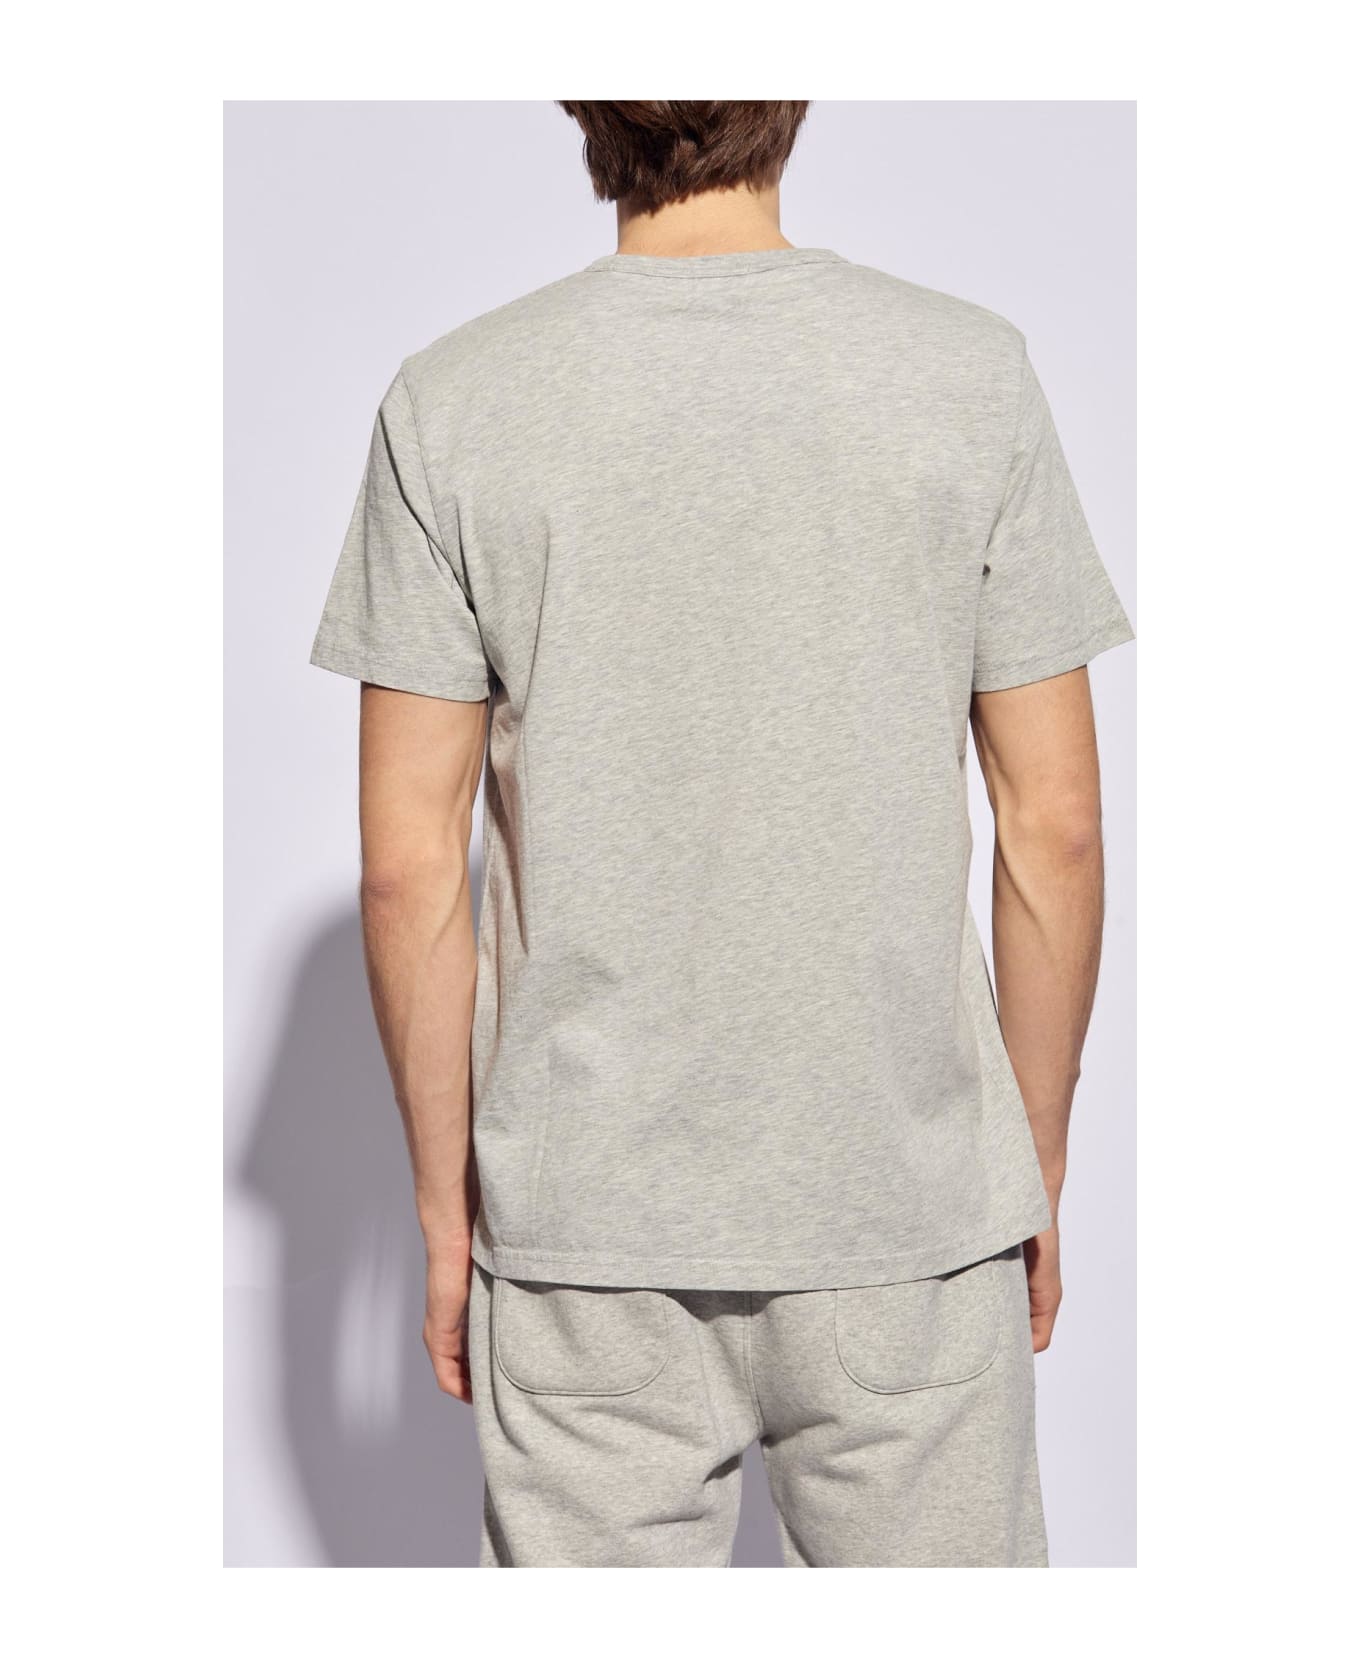 Woolrich T-shirt With Logo - Light Grey Melange シャツ